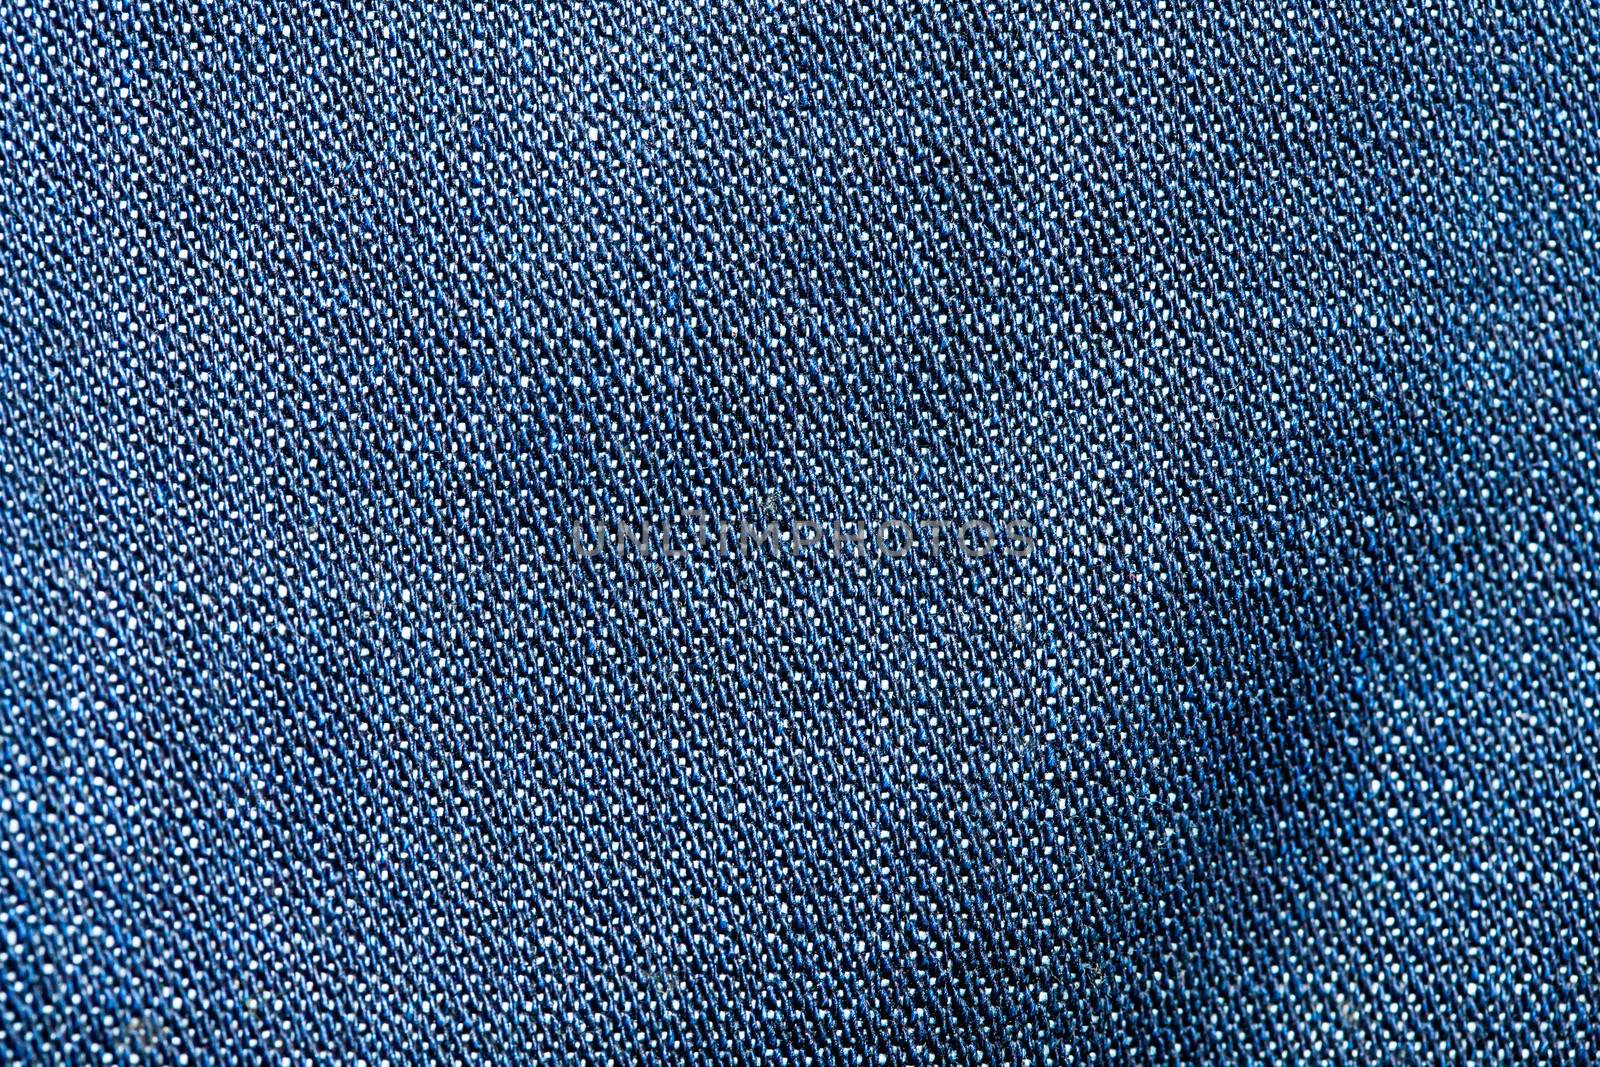 High resolution scan of light blue denim fabric. by sfinks